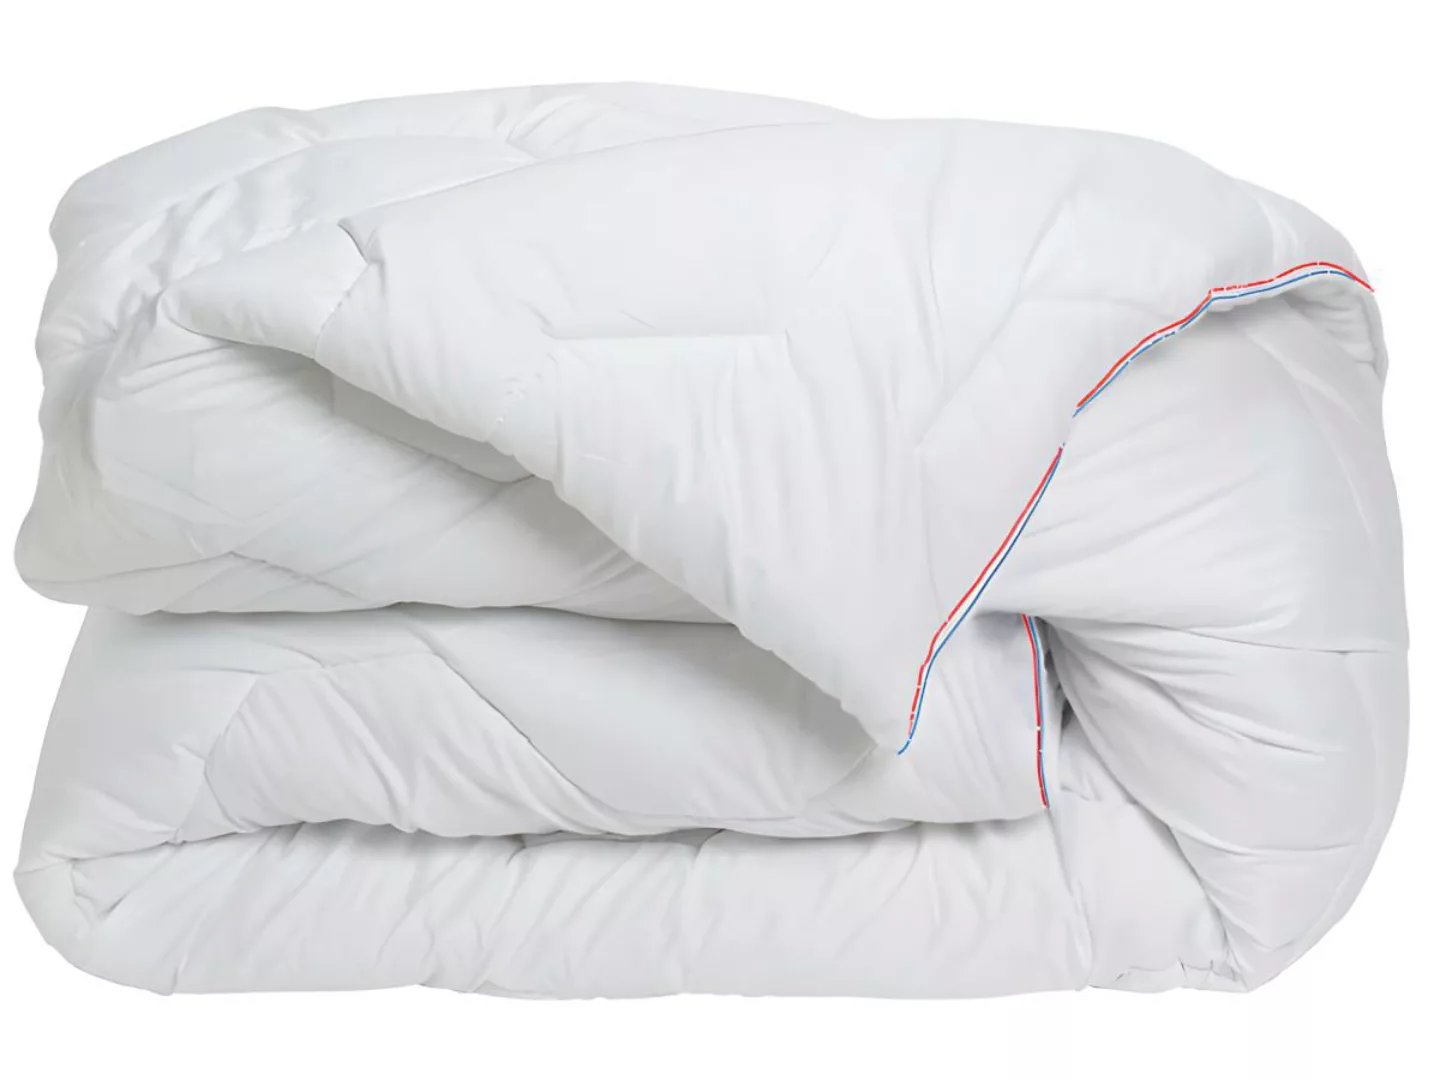 Bettdecke - 400 gr/m² - 240 x 260 cm - Baumwollperkal - Weiß - AUXENCE günstig online kaufen